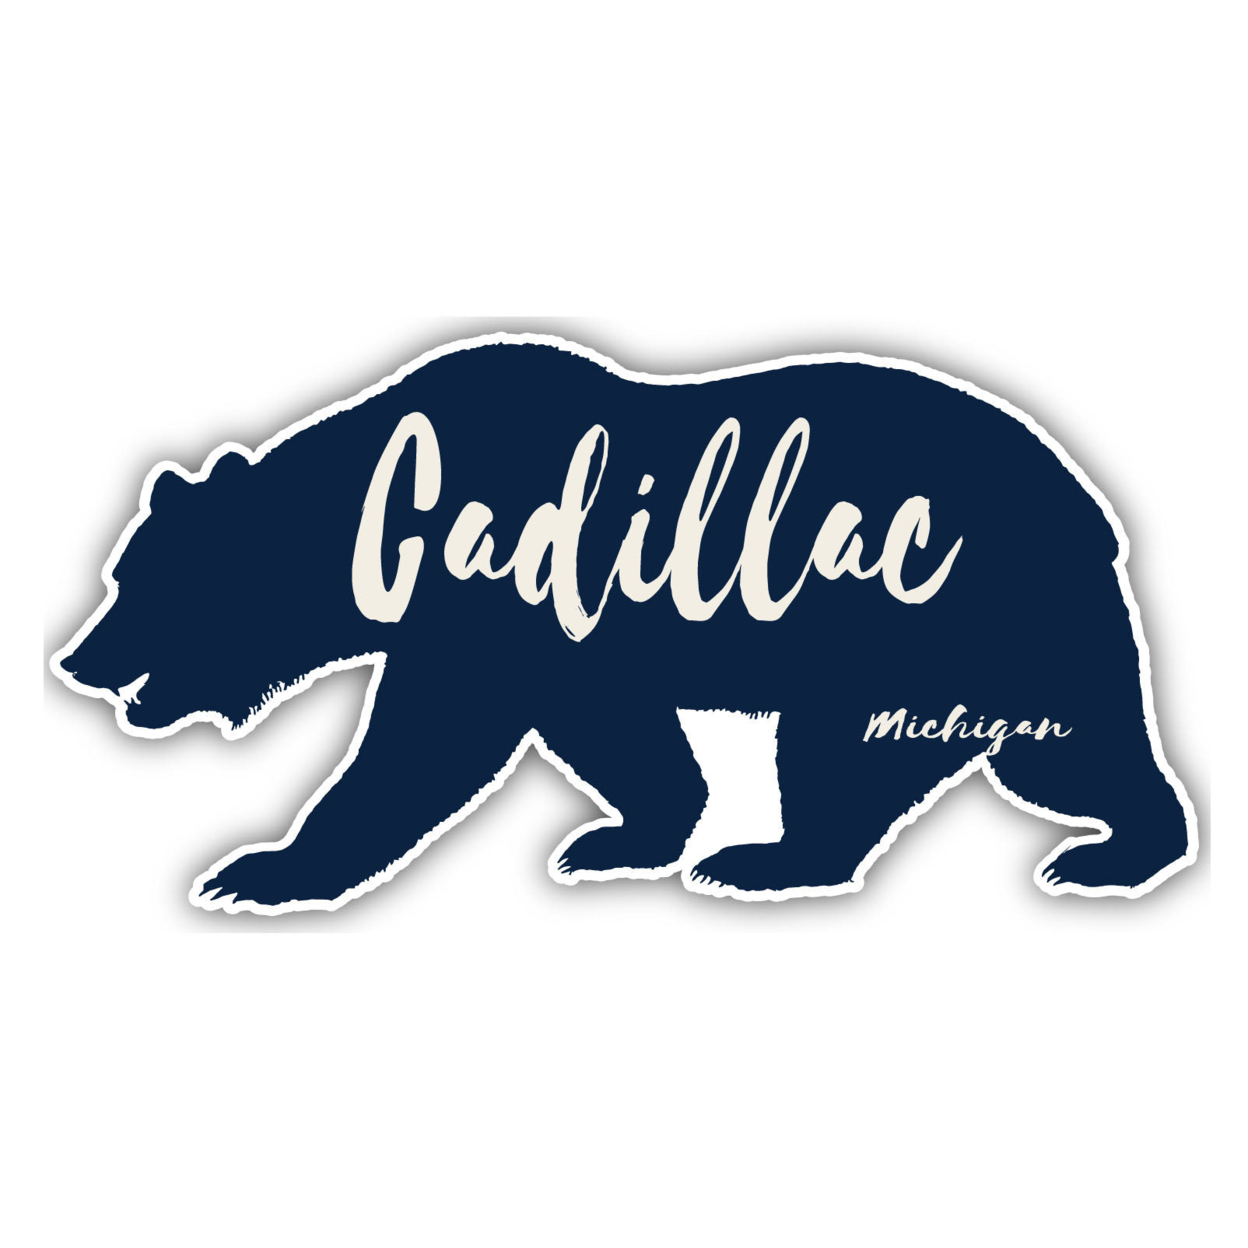 Cadillac Michigan Souvenir Decorative Stickers (Choose Theme And Size) - Single Unit, 4-Inch, Bear